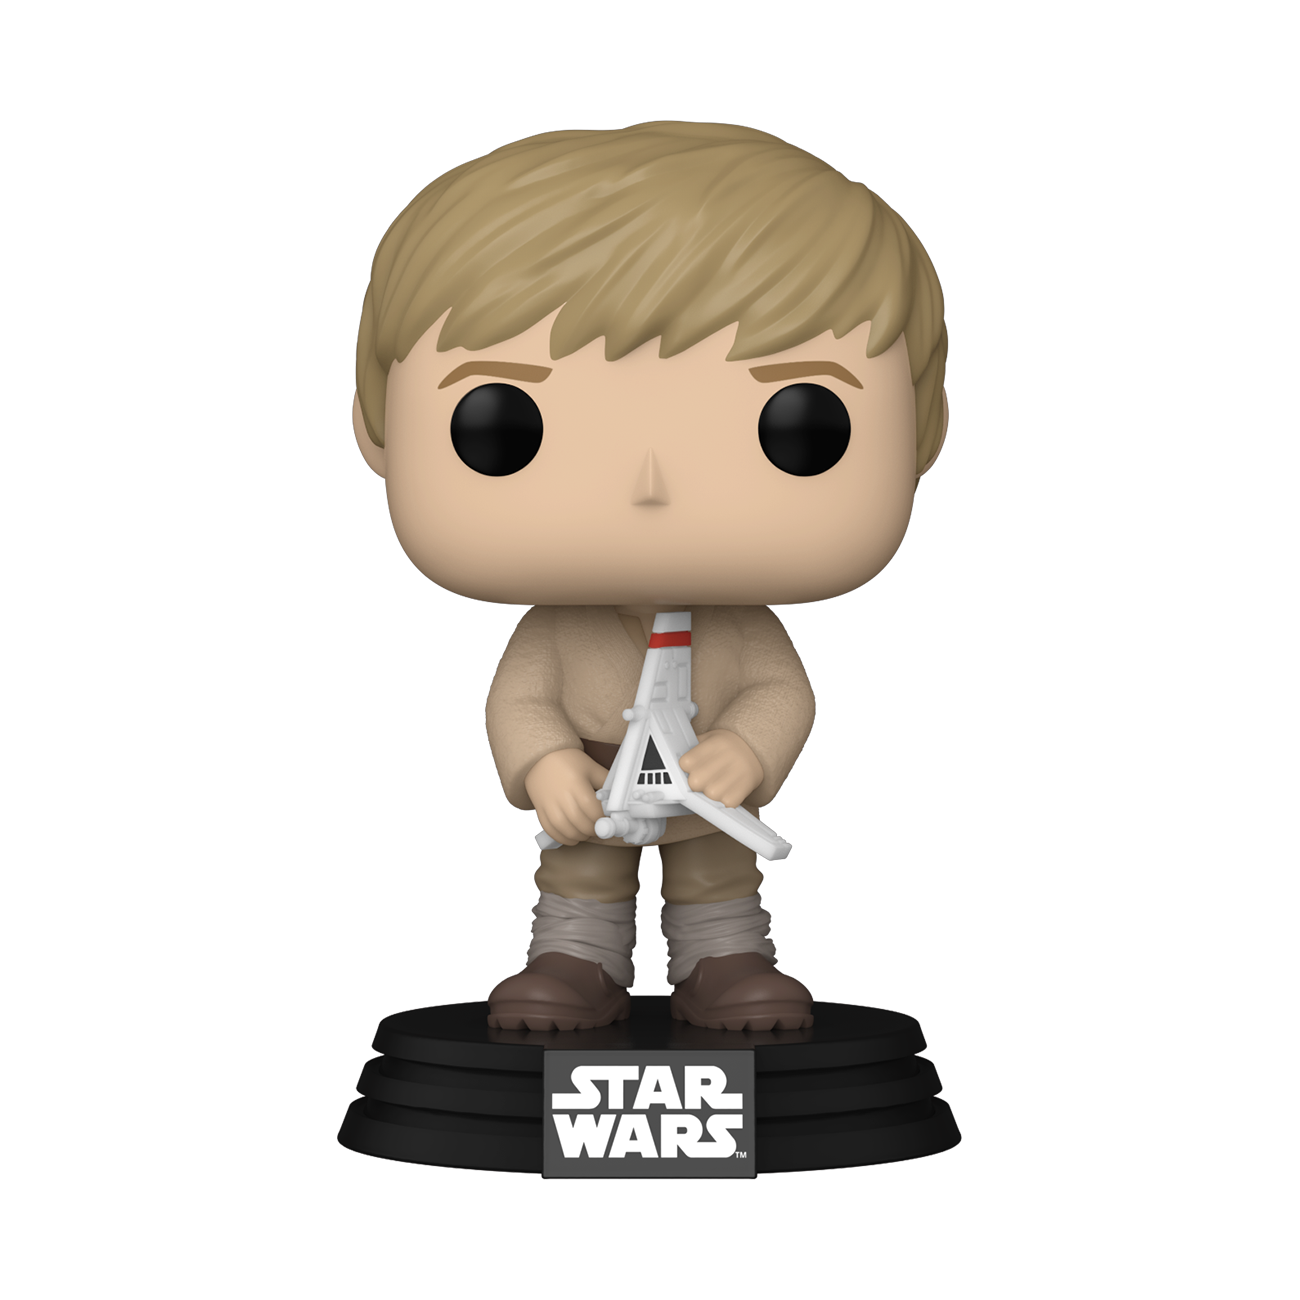 Star Wars - POP! Young Luke